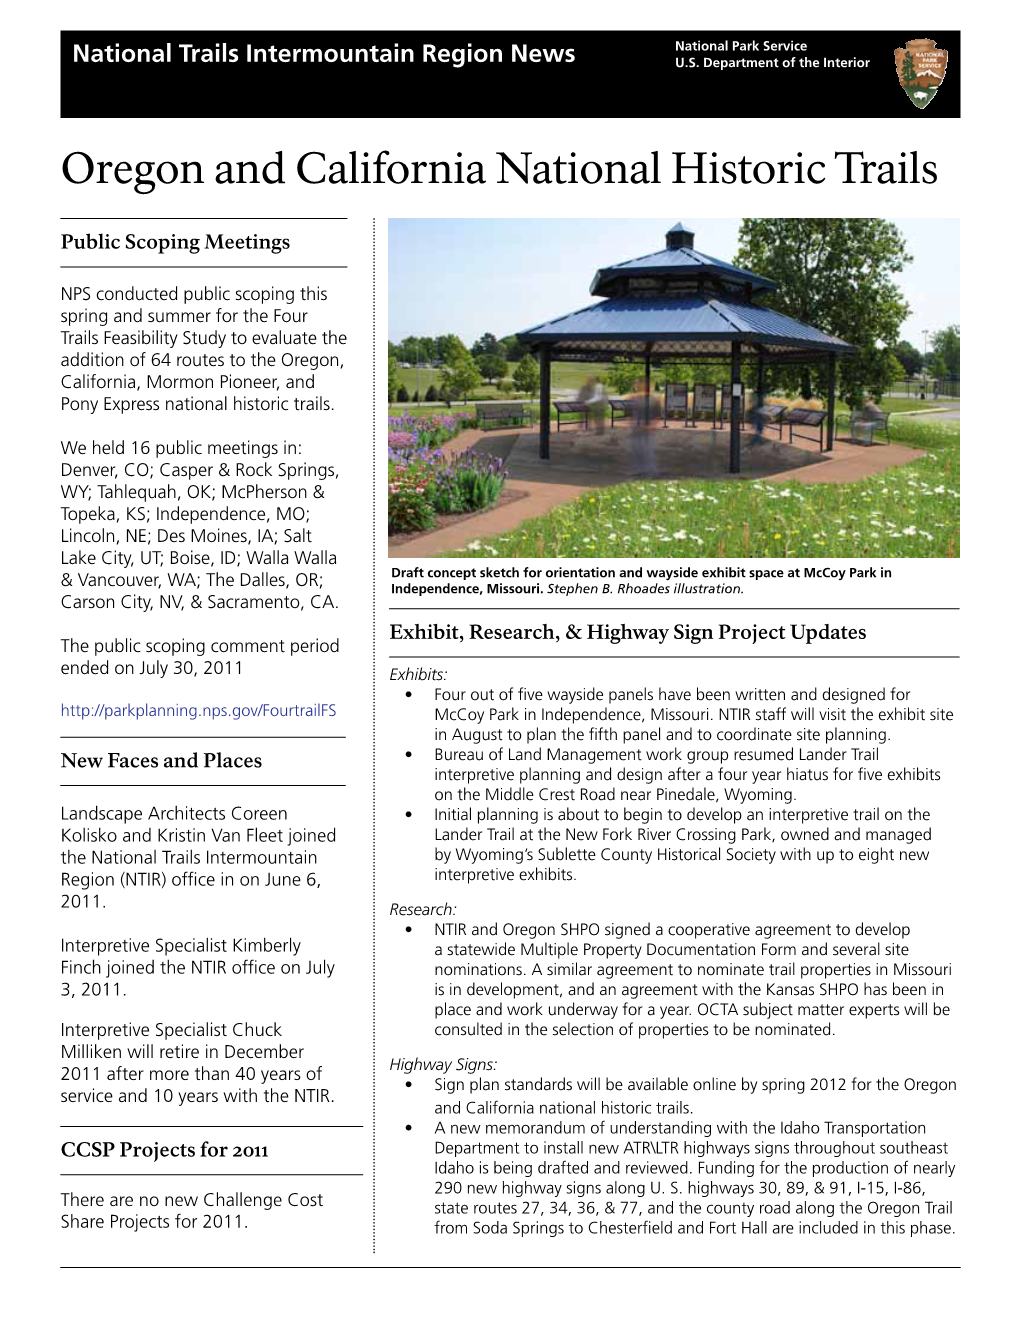 Oregon and California National Historic Trails